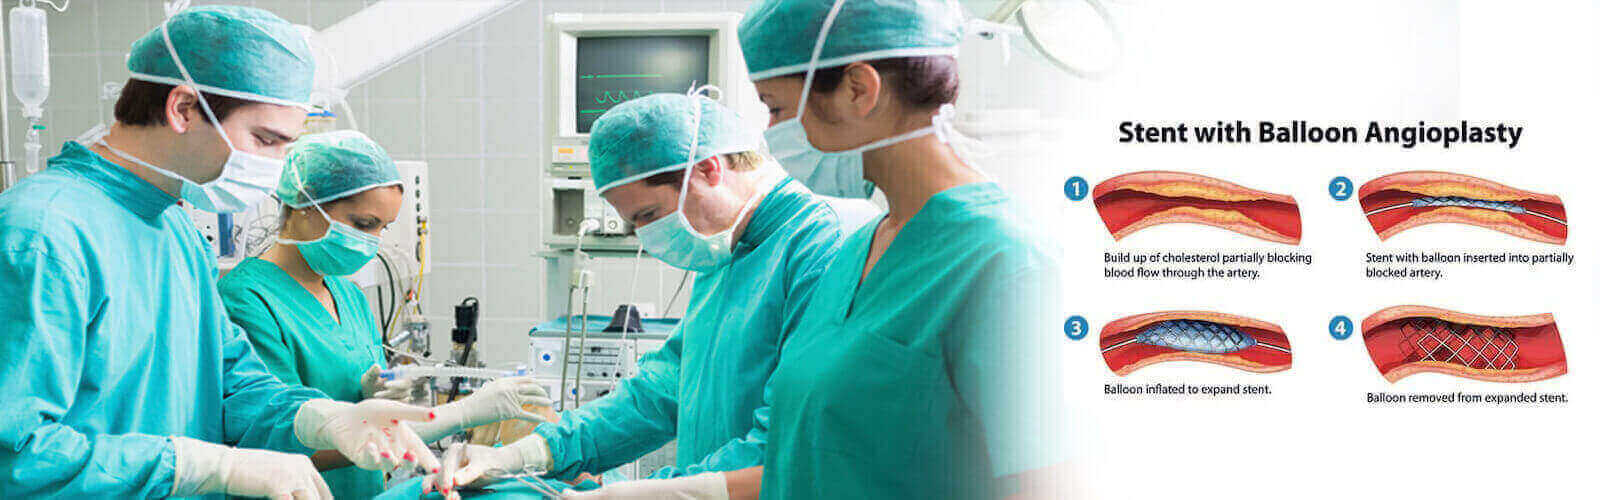 Angioplasty Surgery in Leeds